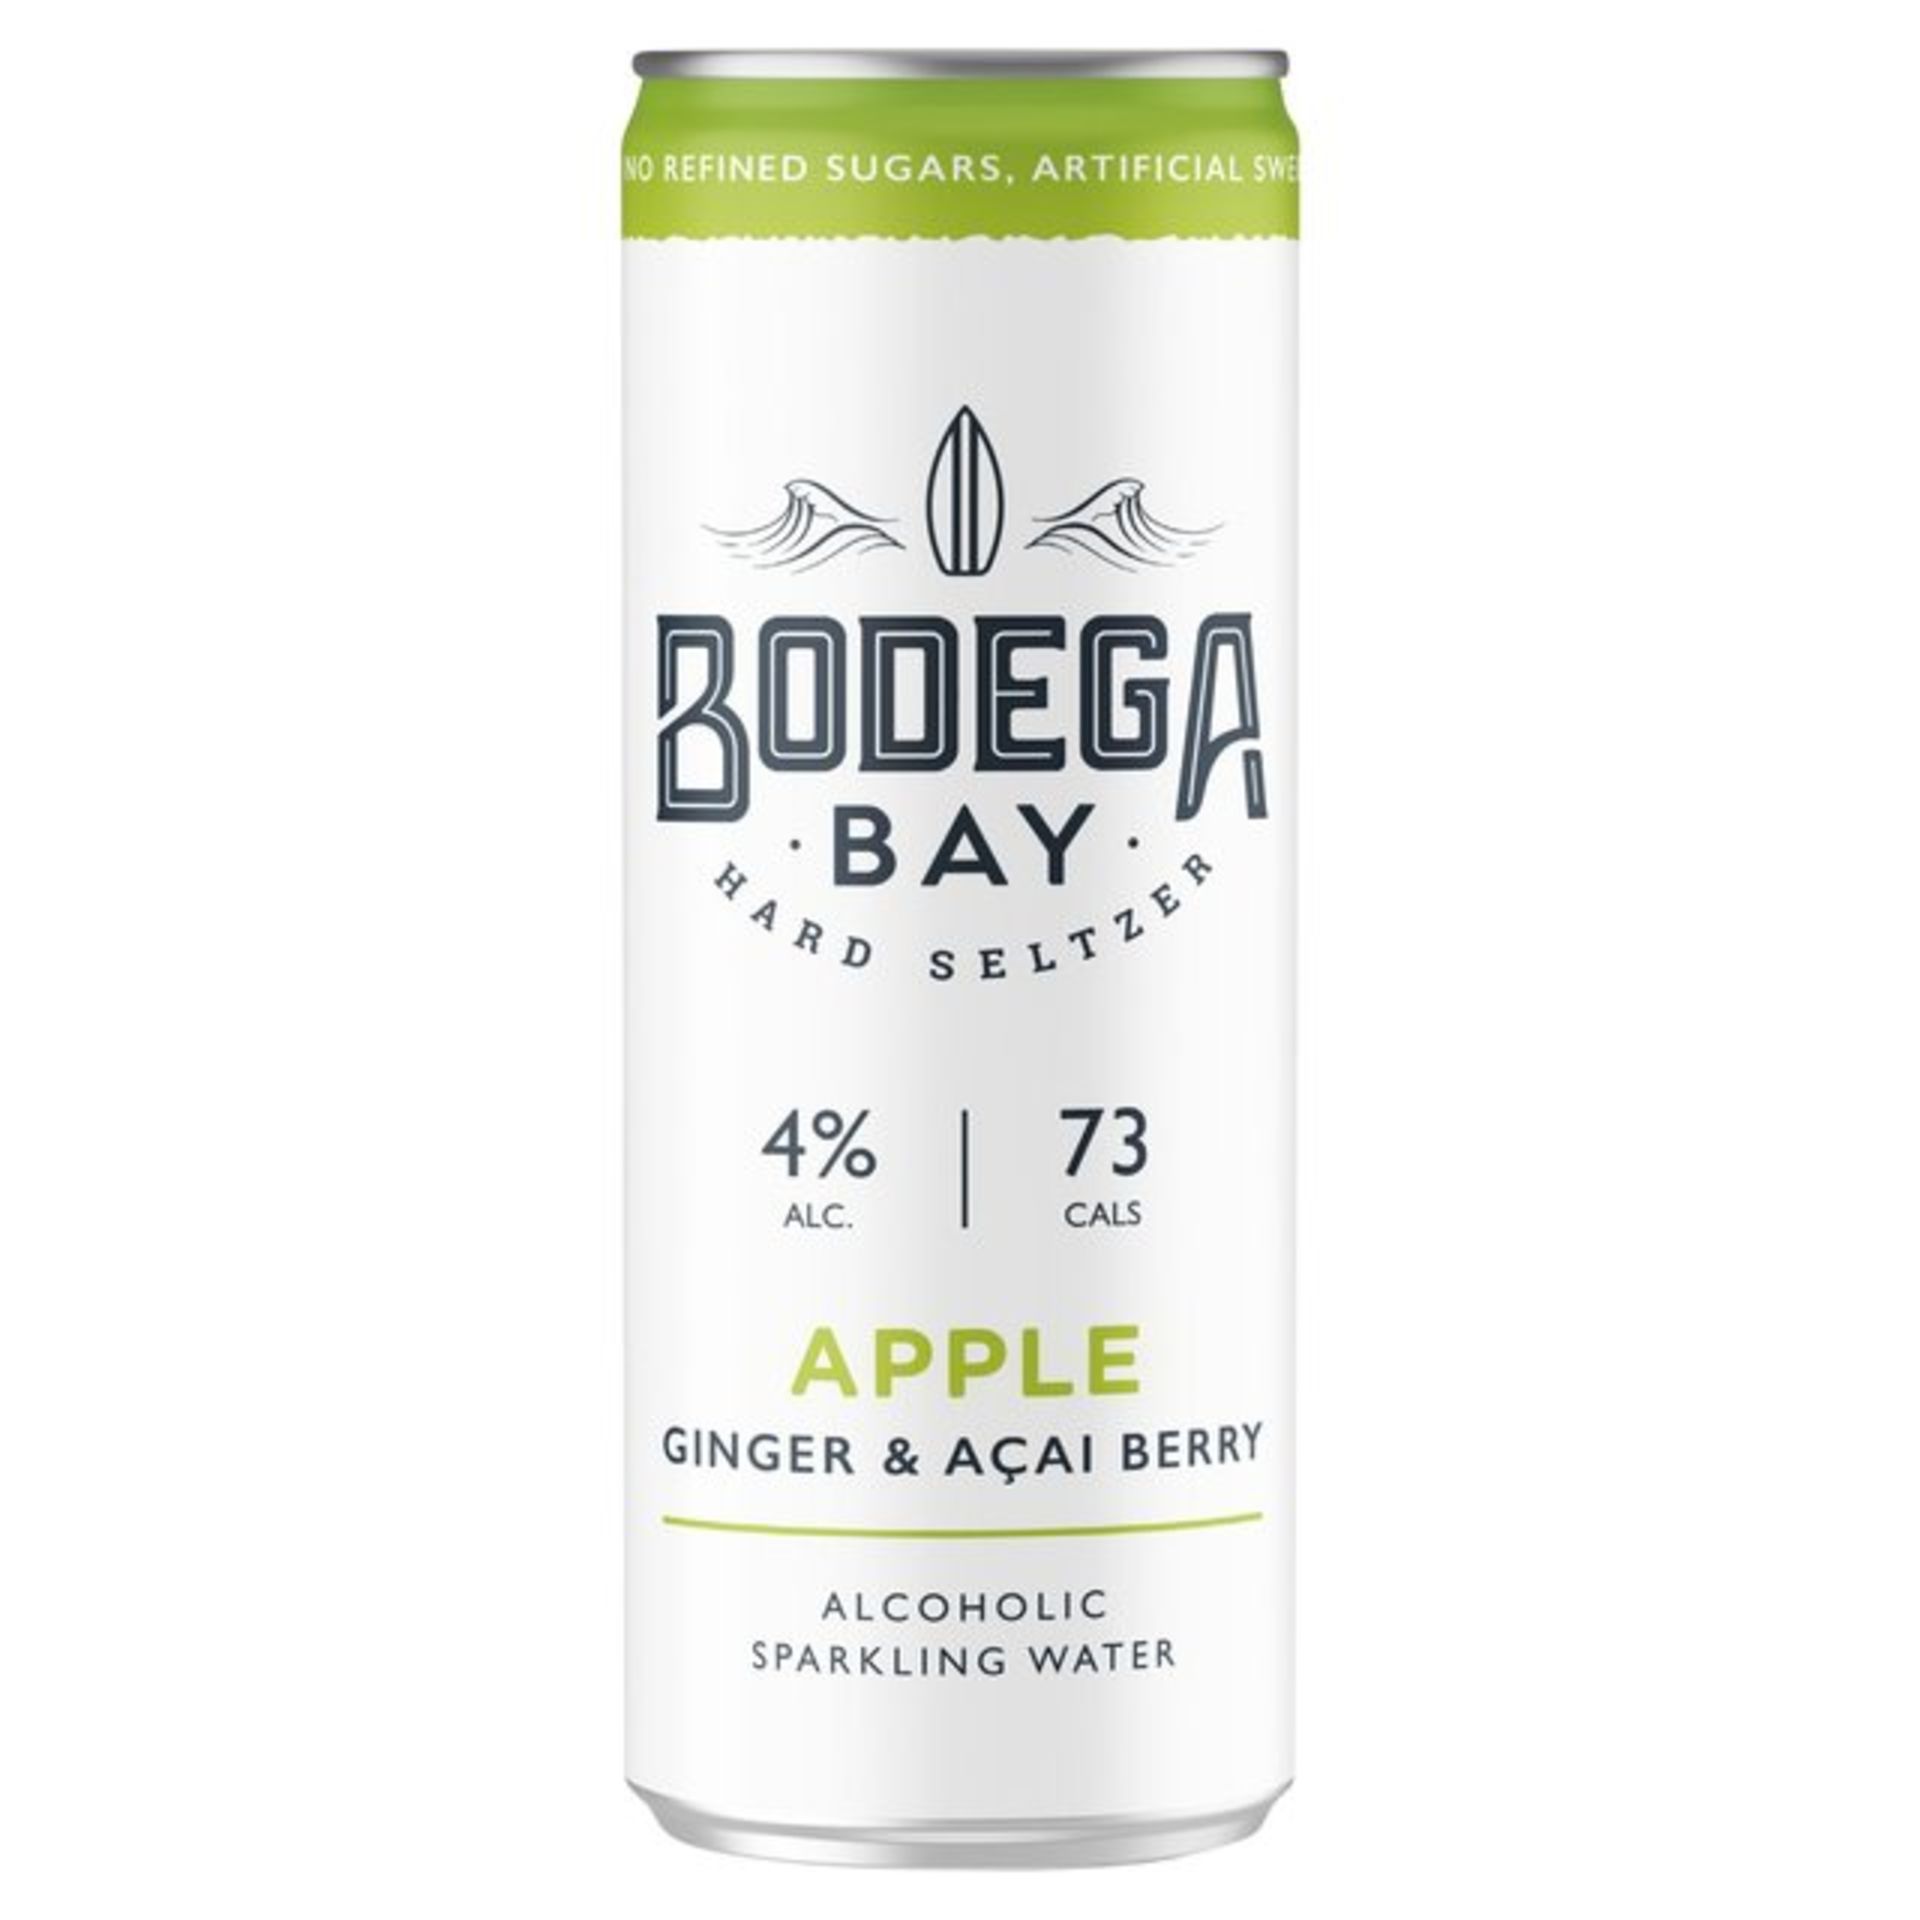 90 x Bodega Bay Hard Seltzer 250ml Alcoholic Sparkling Water Drinks - Apple Ginger & Acai Berry - 4% - Image 2 of 6